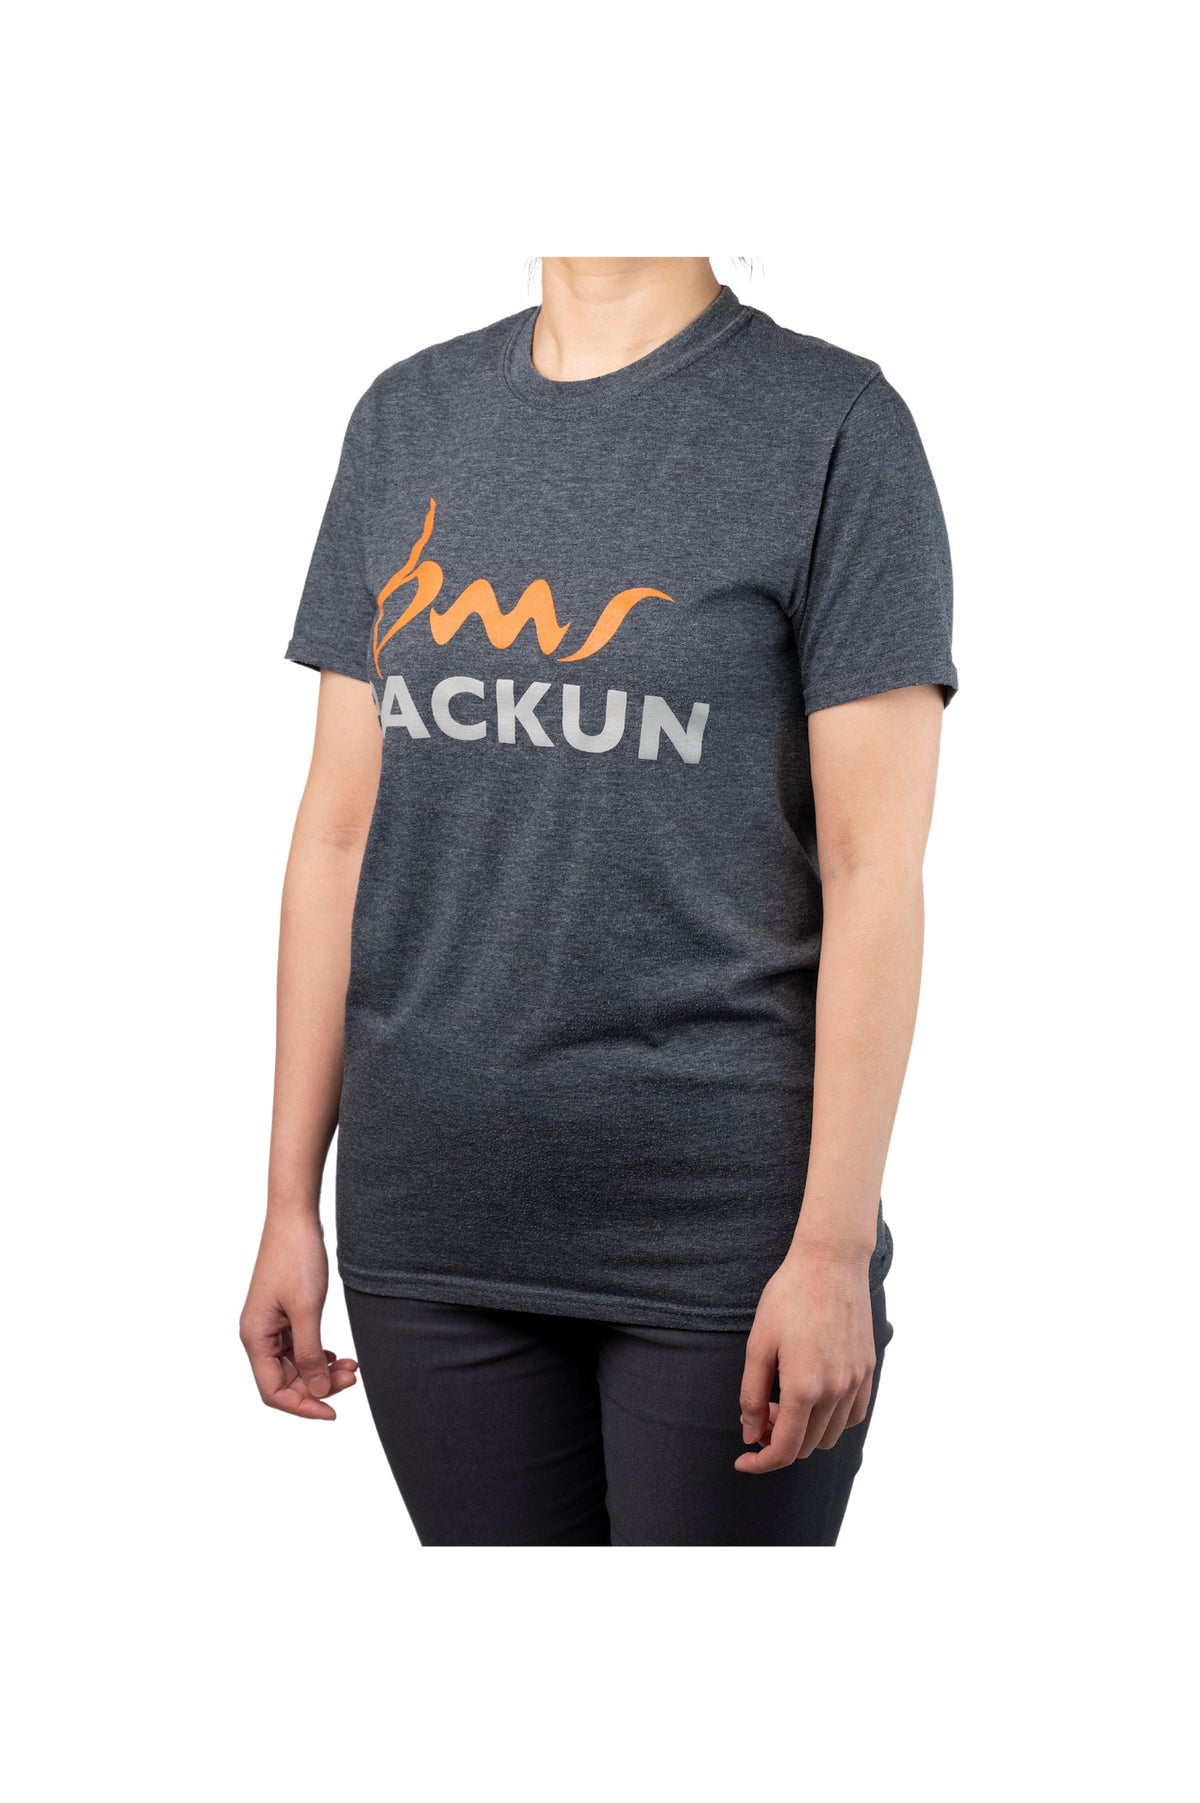 Backun T-Shirt